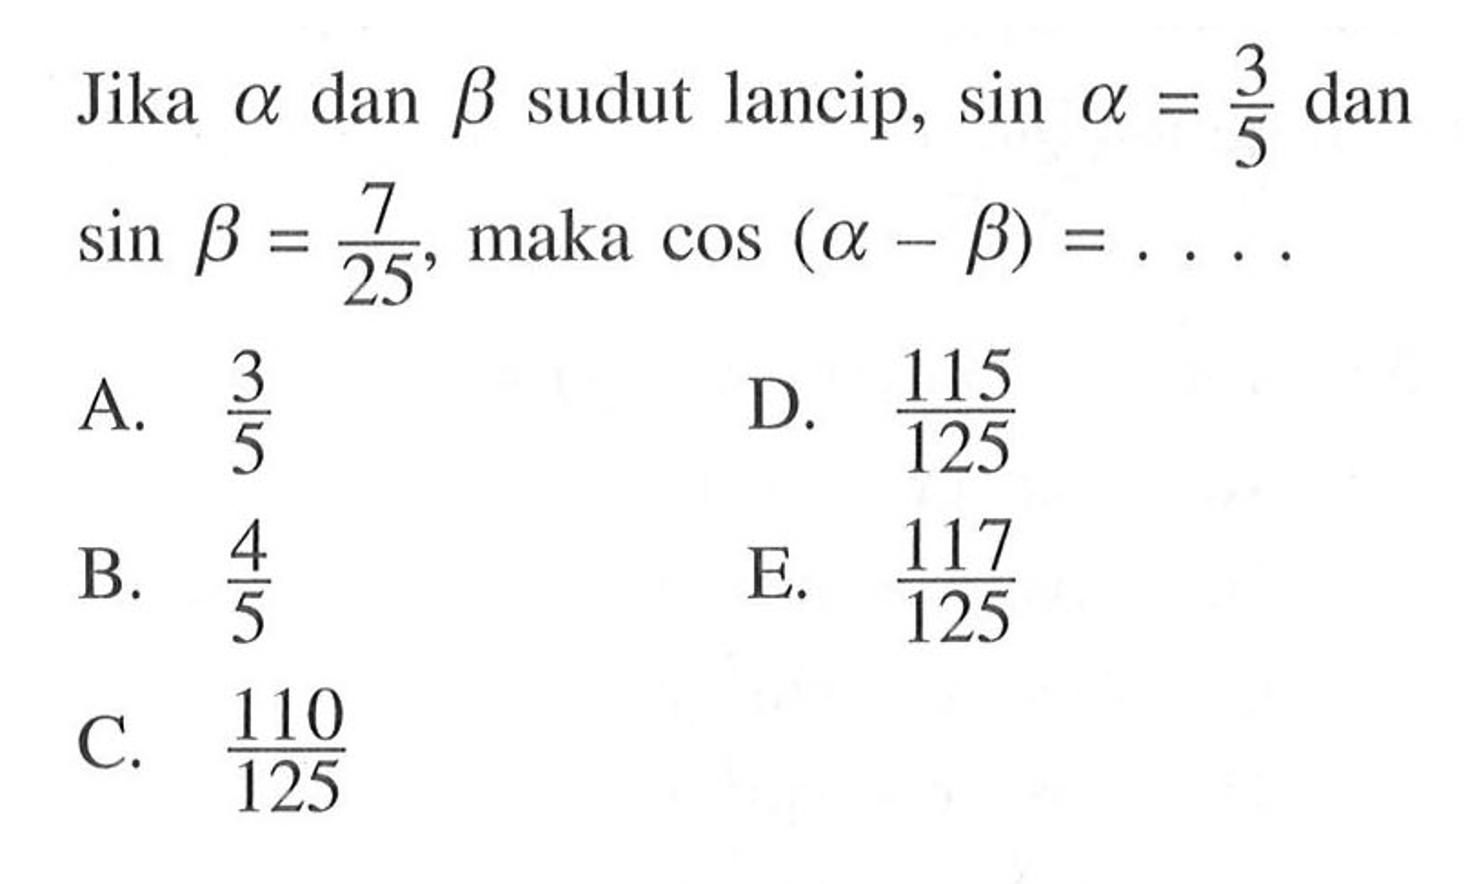 Jika alpha dan beta sudut lancip, sin alpha=3/5 dan sin beta=7/25, maka cos(alpha-beta)=...